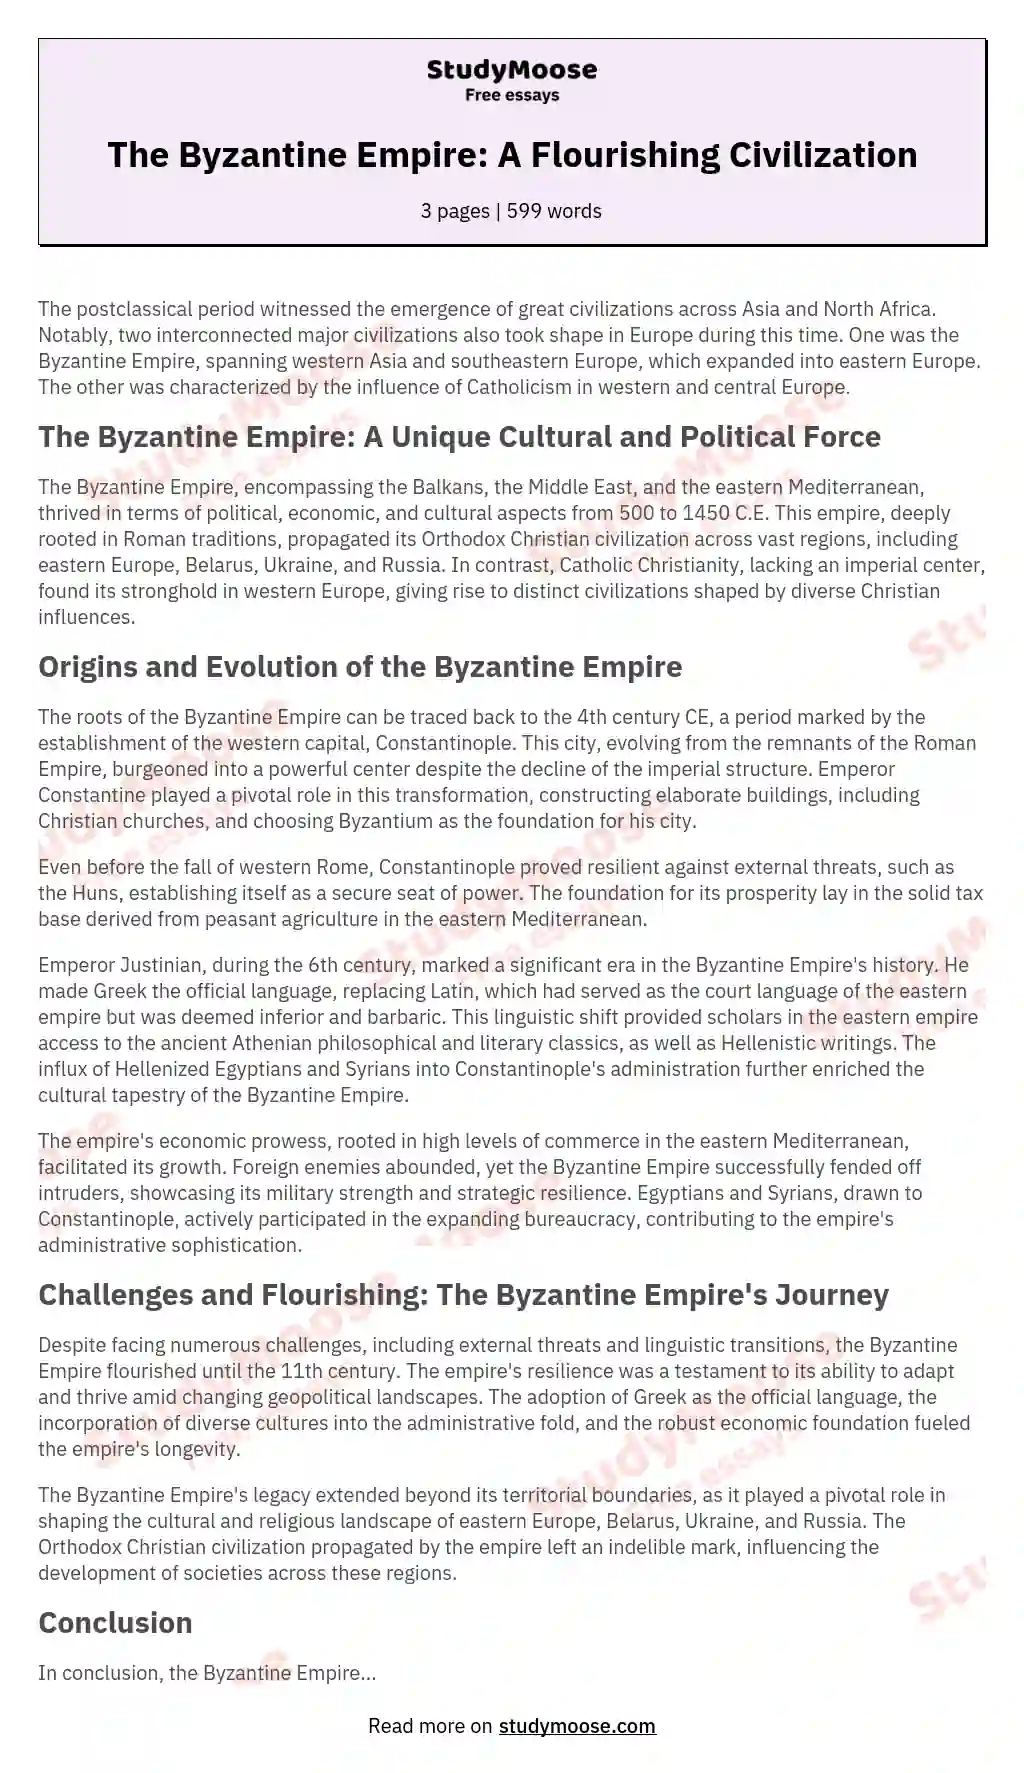 The Byzantine Empire: A Flourishing Civilization essay